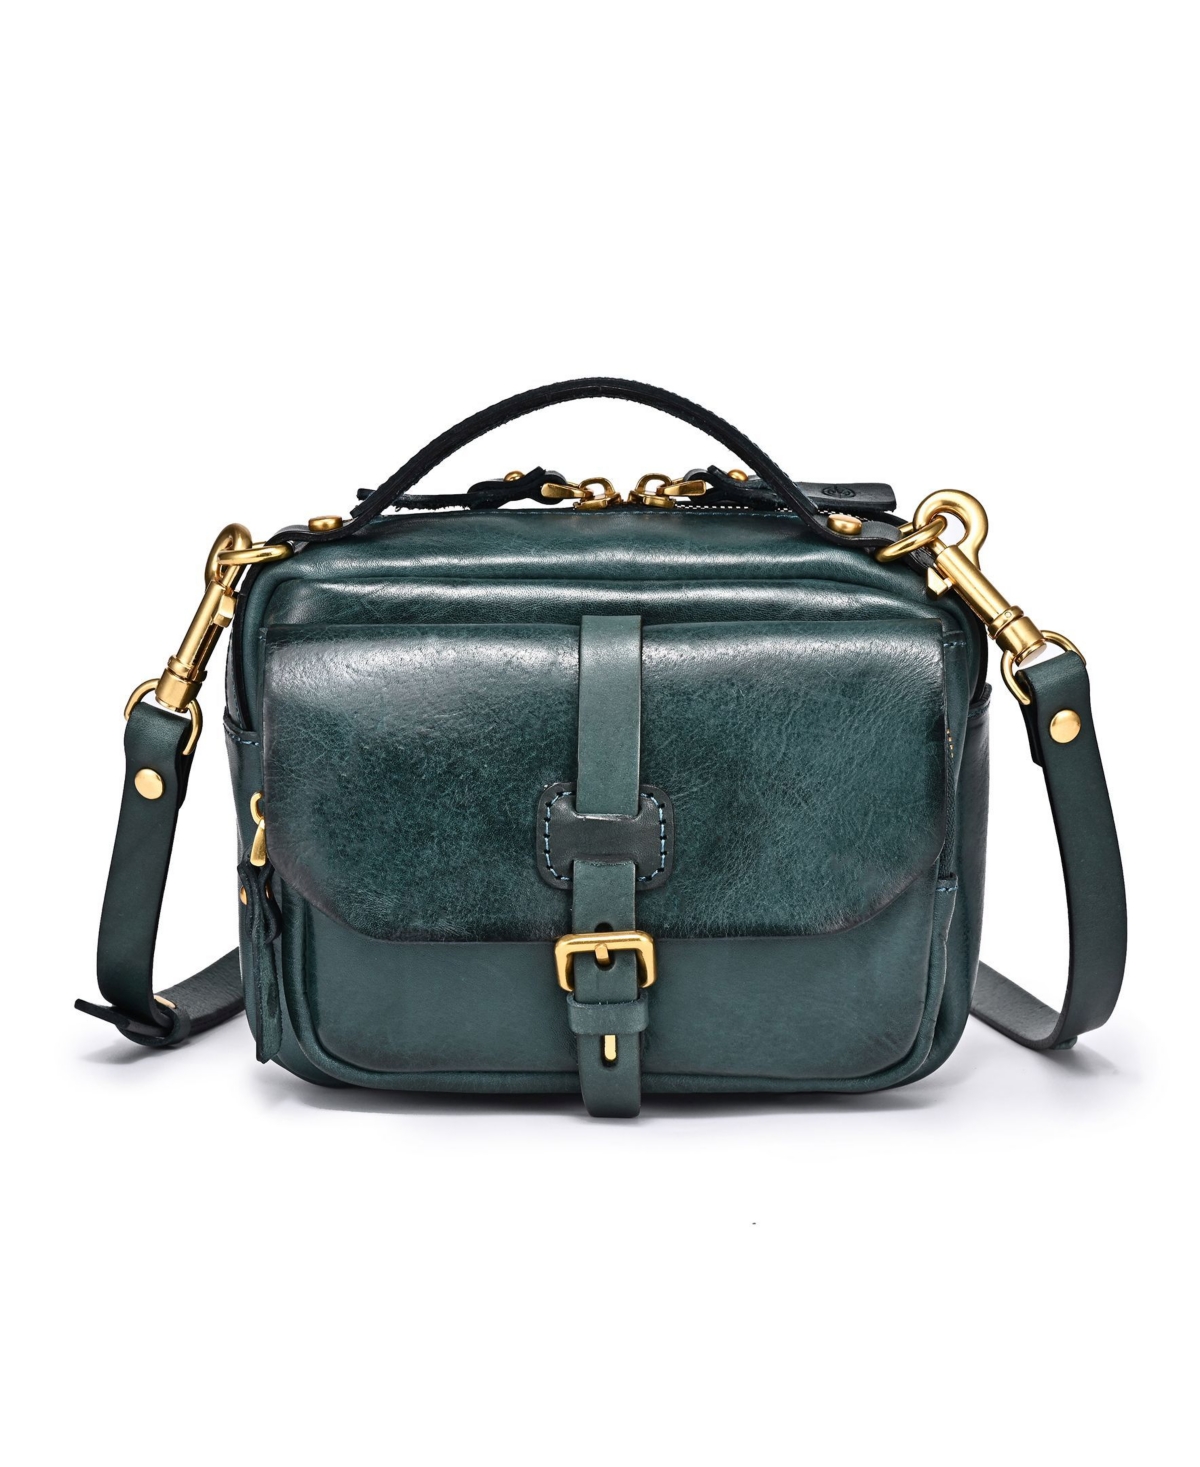 Women's Genuine Leather Focus Cross body Bag - Turquoise